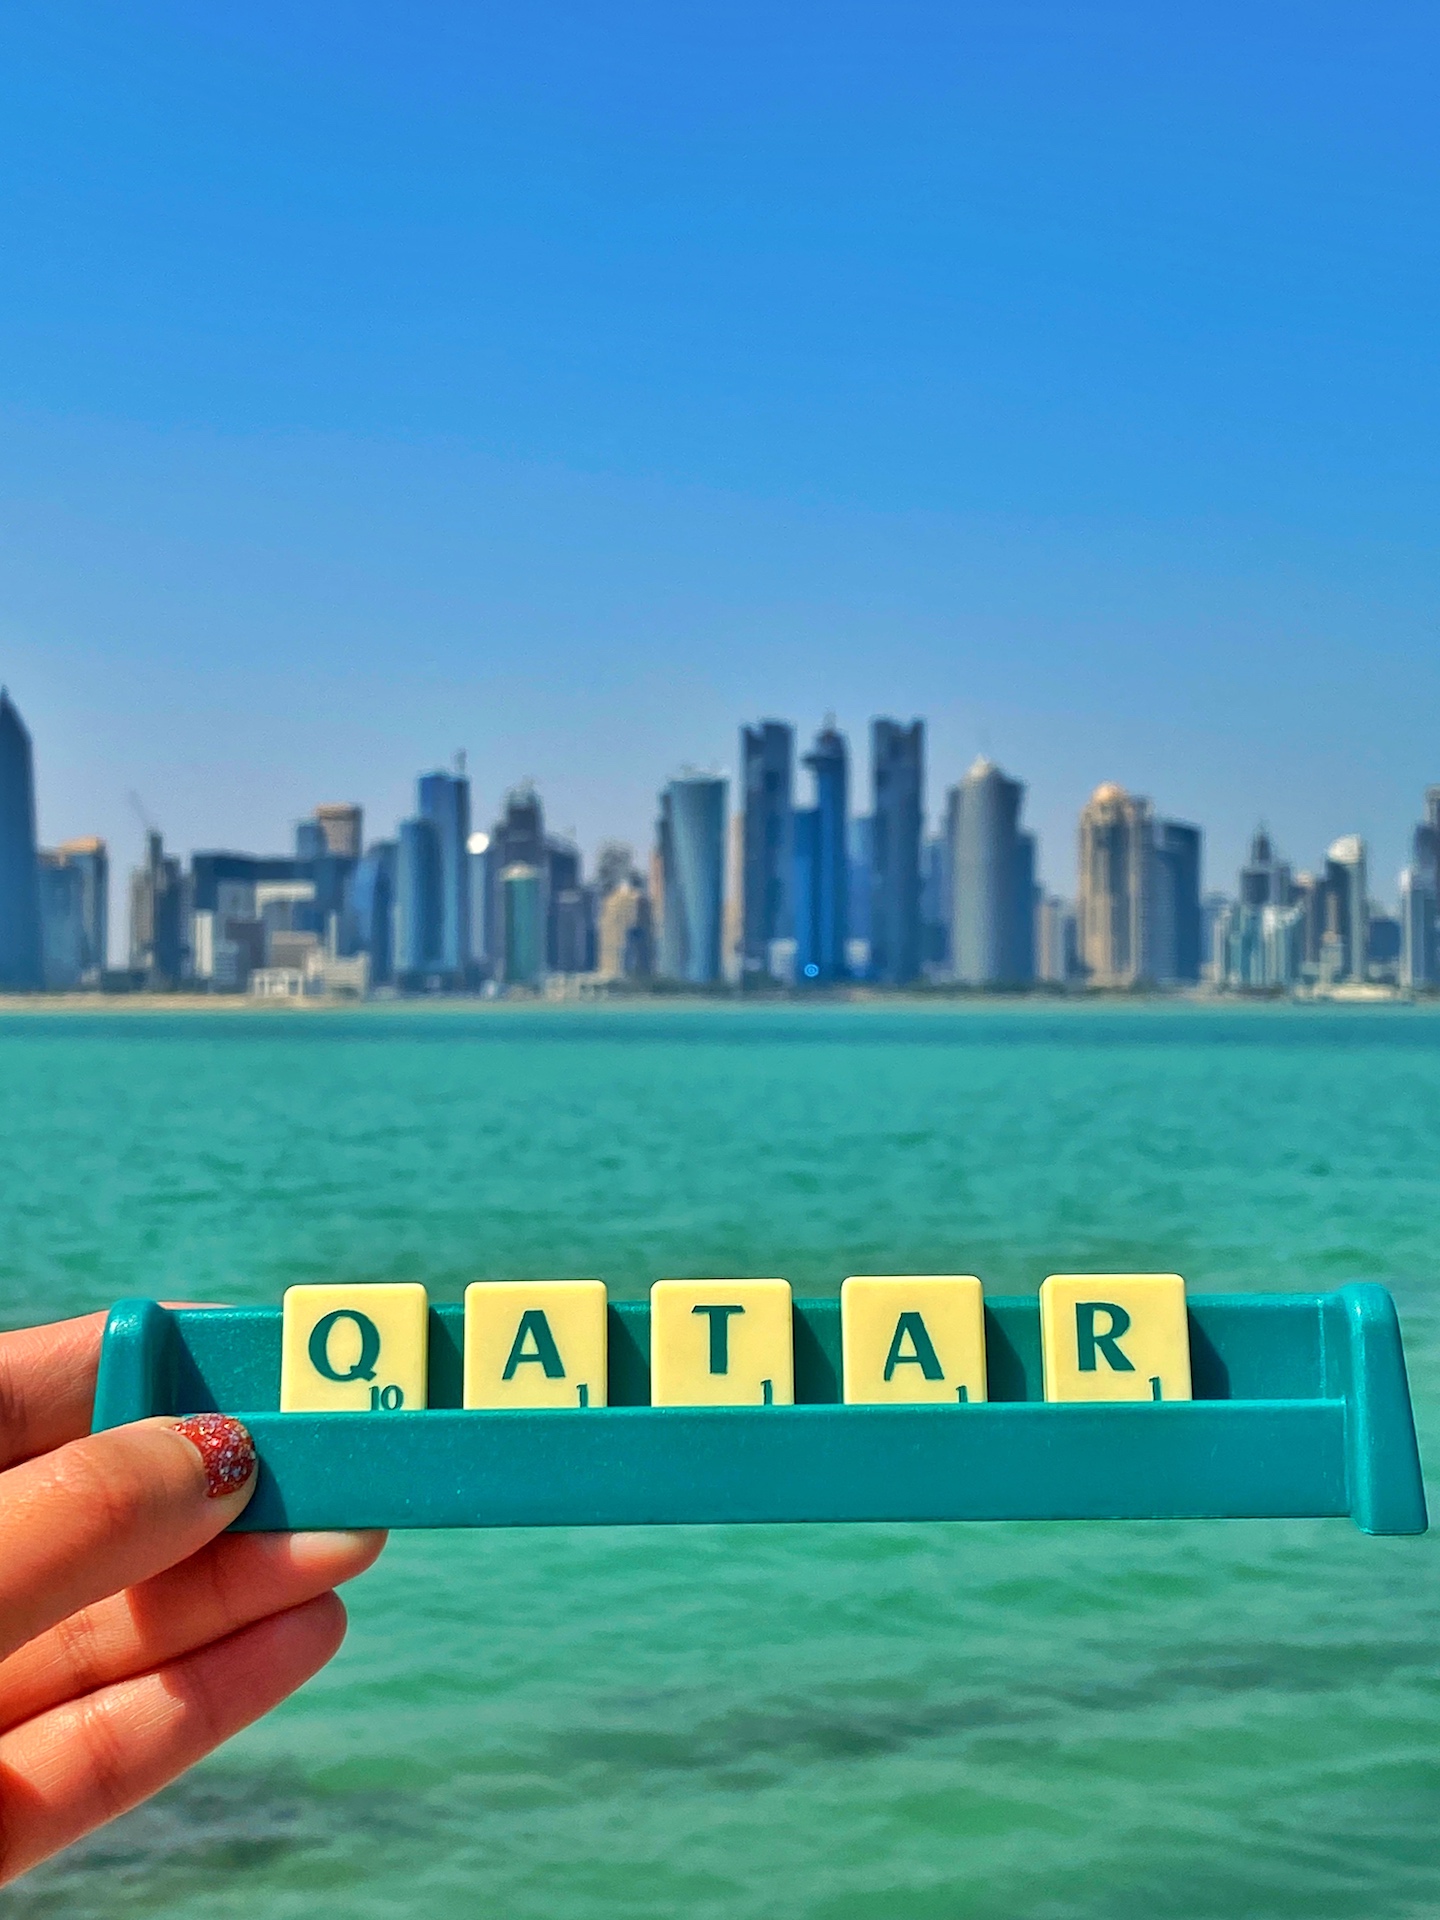 the pearl qatar logo